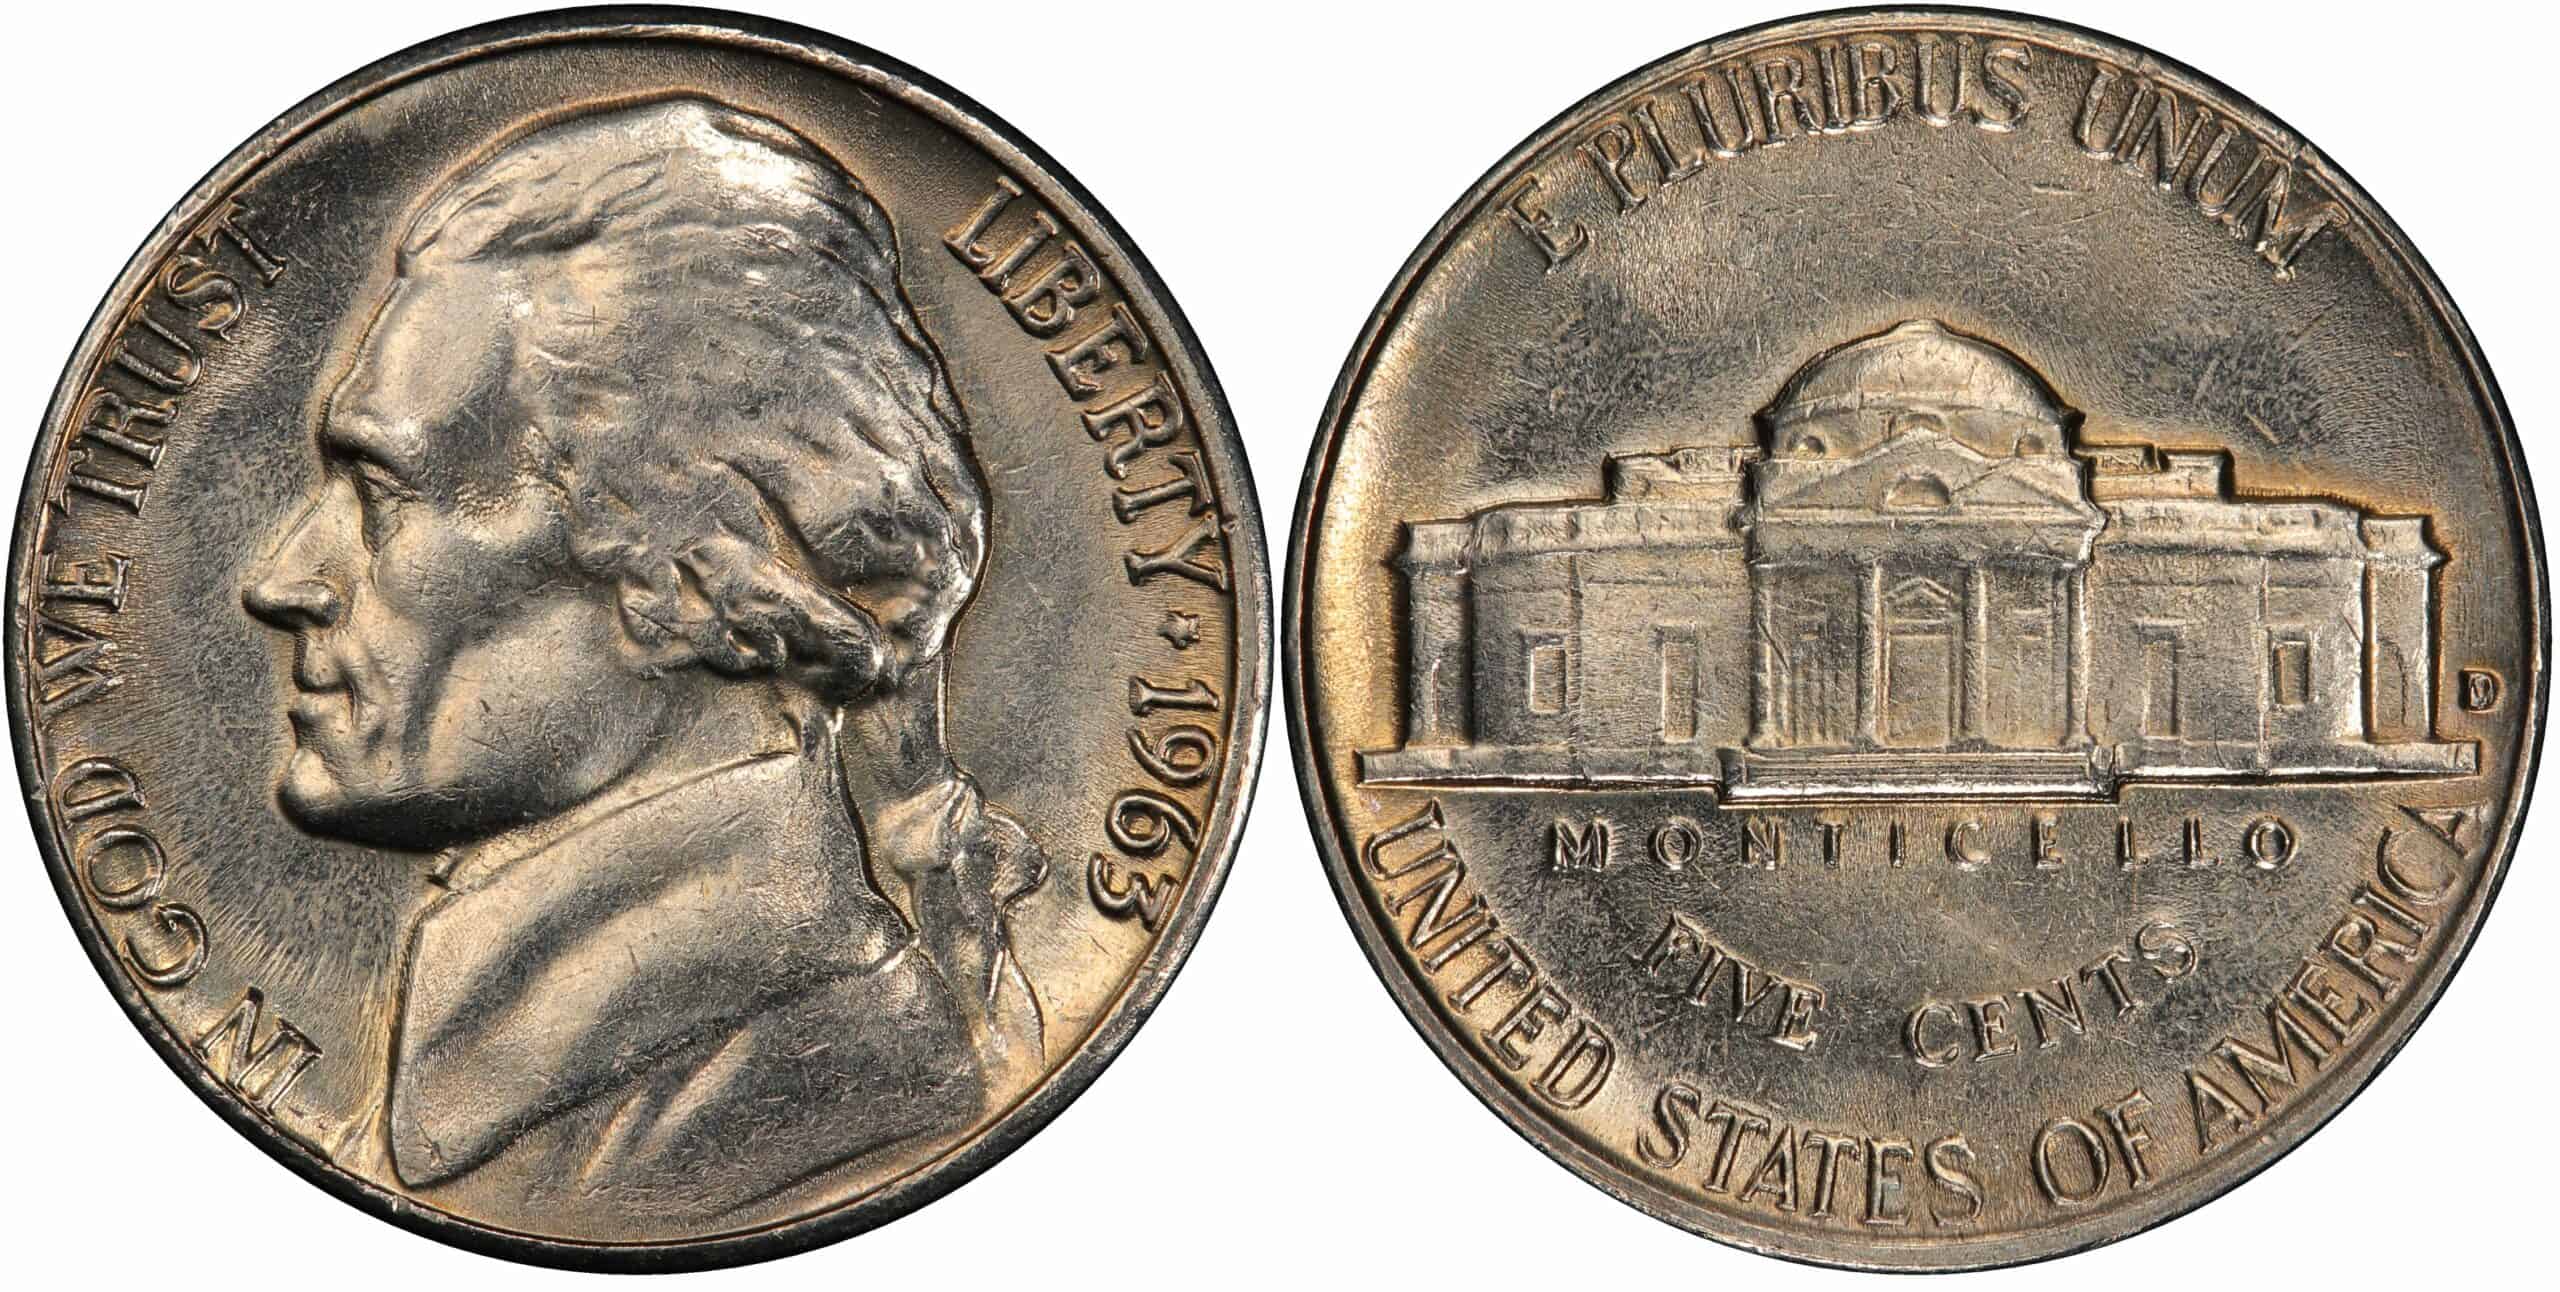 1963 D Jefferson Nickel value